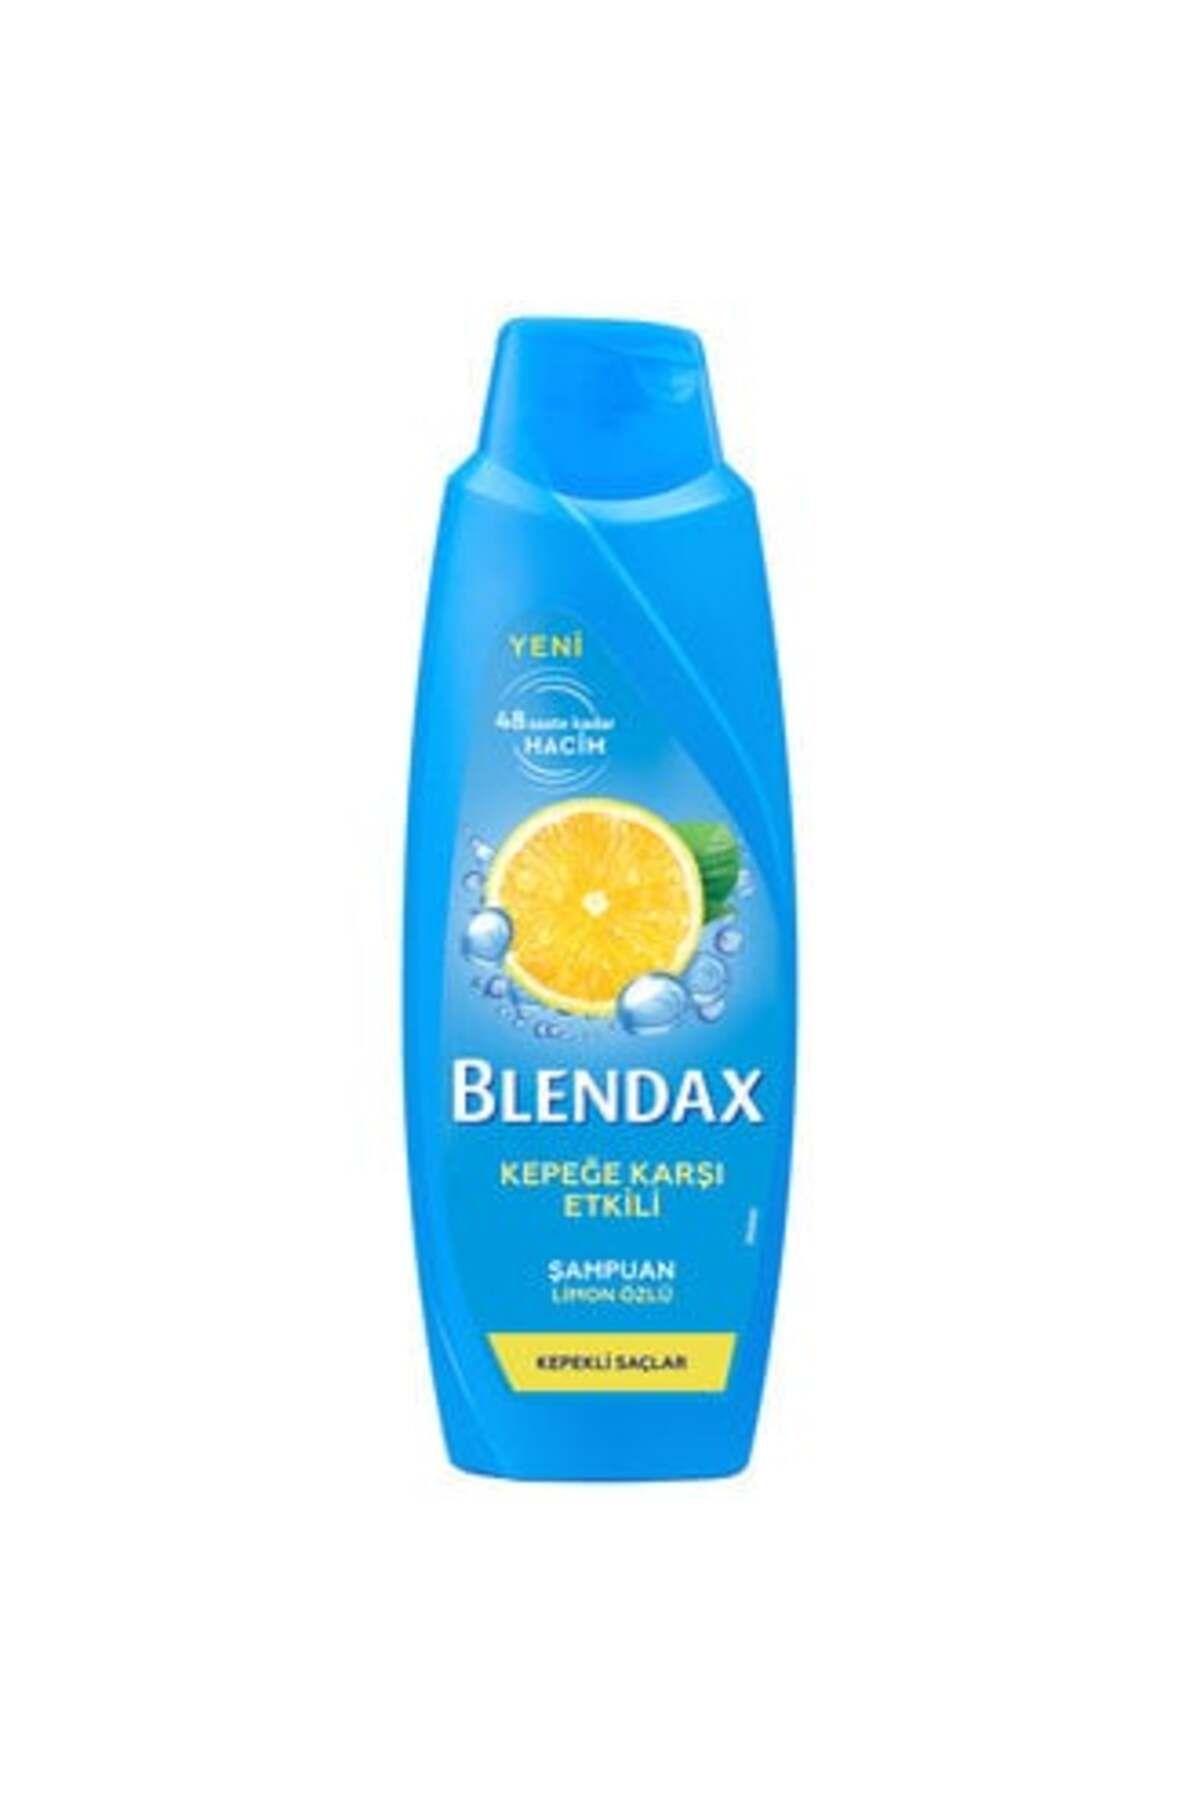 Blendax Kepeğe Karşı Etkili Şampuan 500 Ml ( 1 ADET )